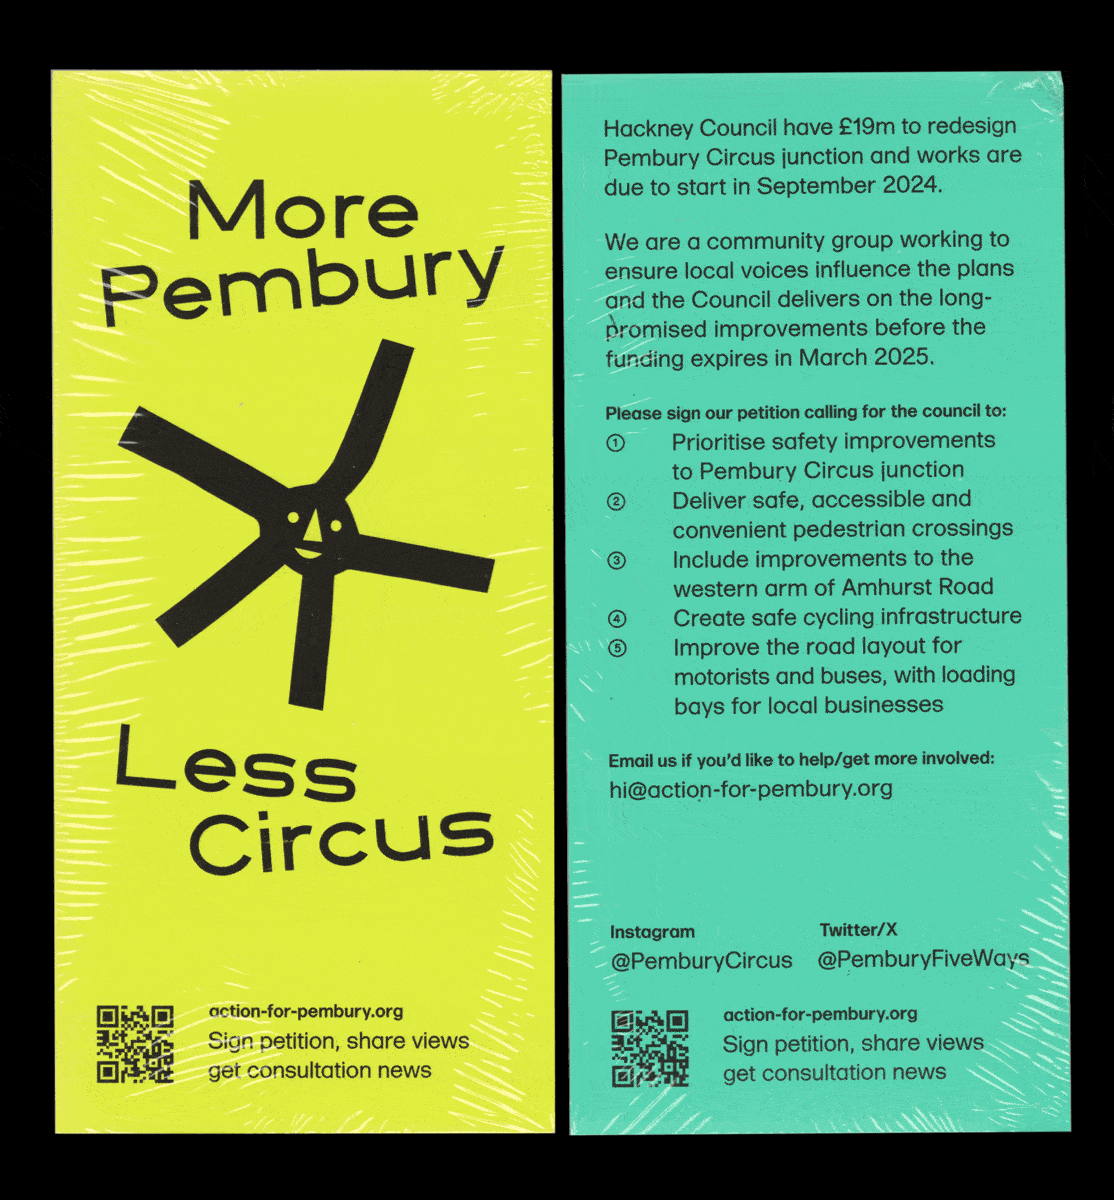 Community Action for Pembury Circus